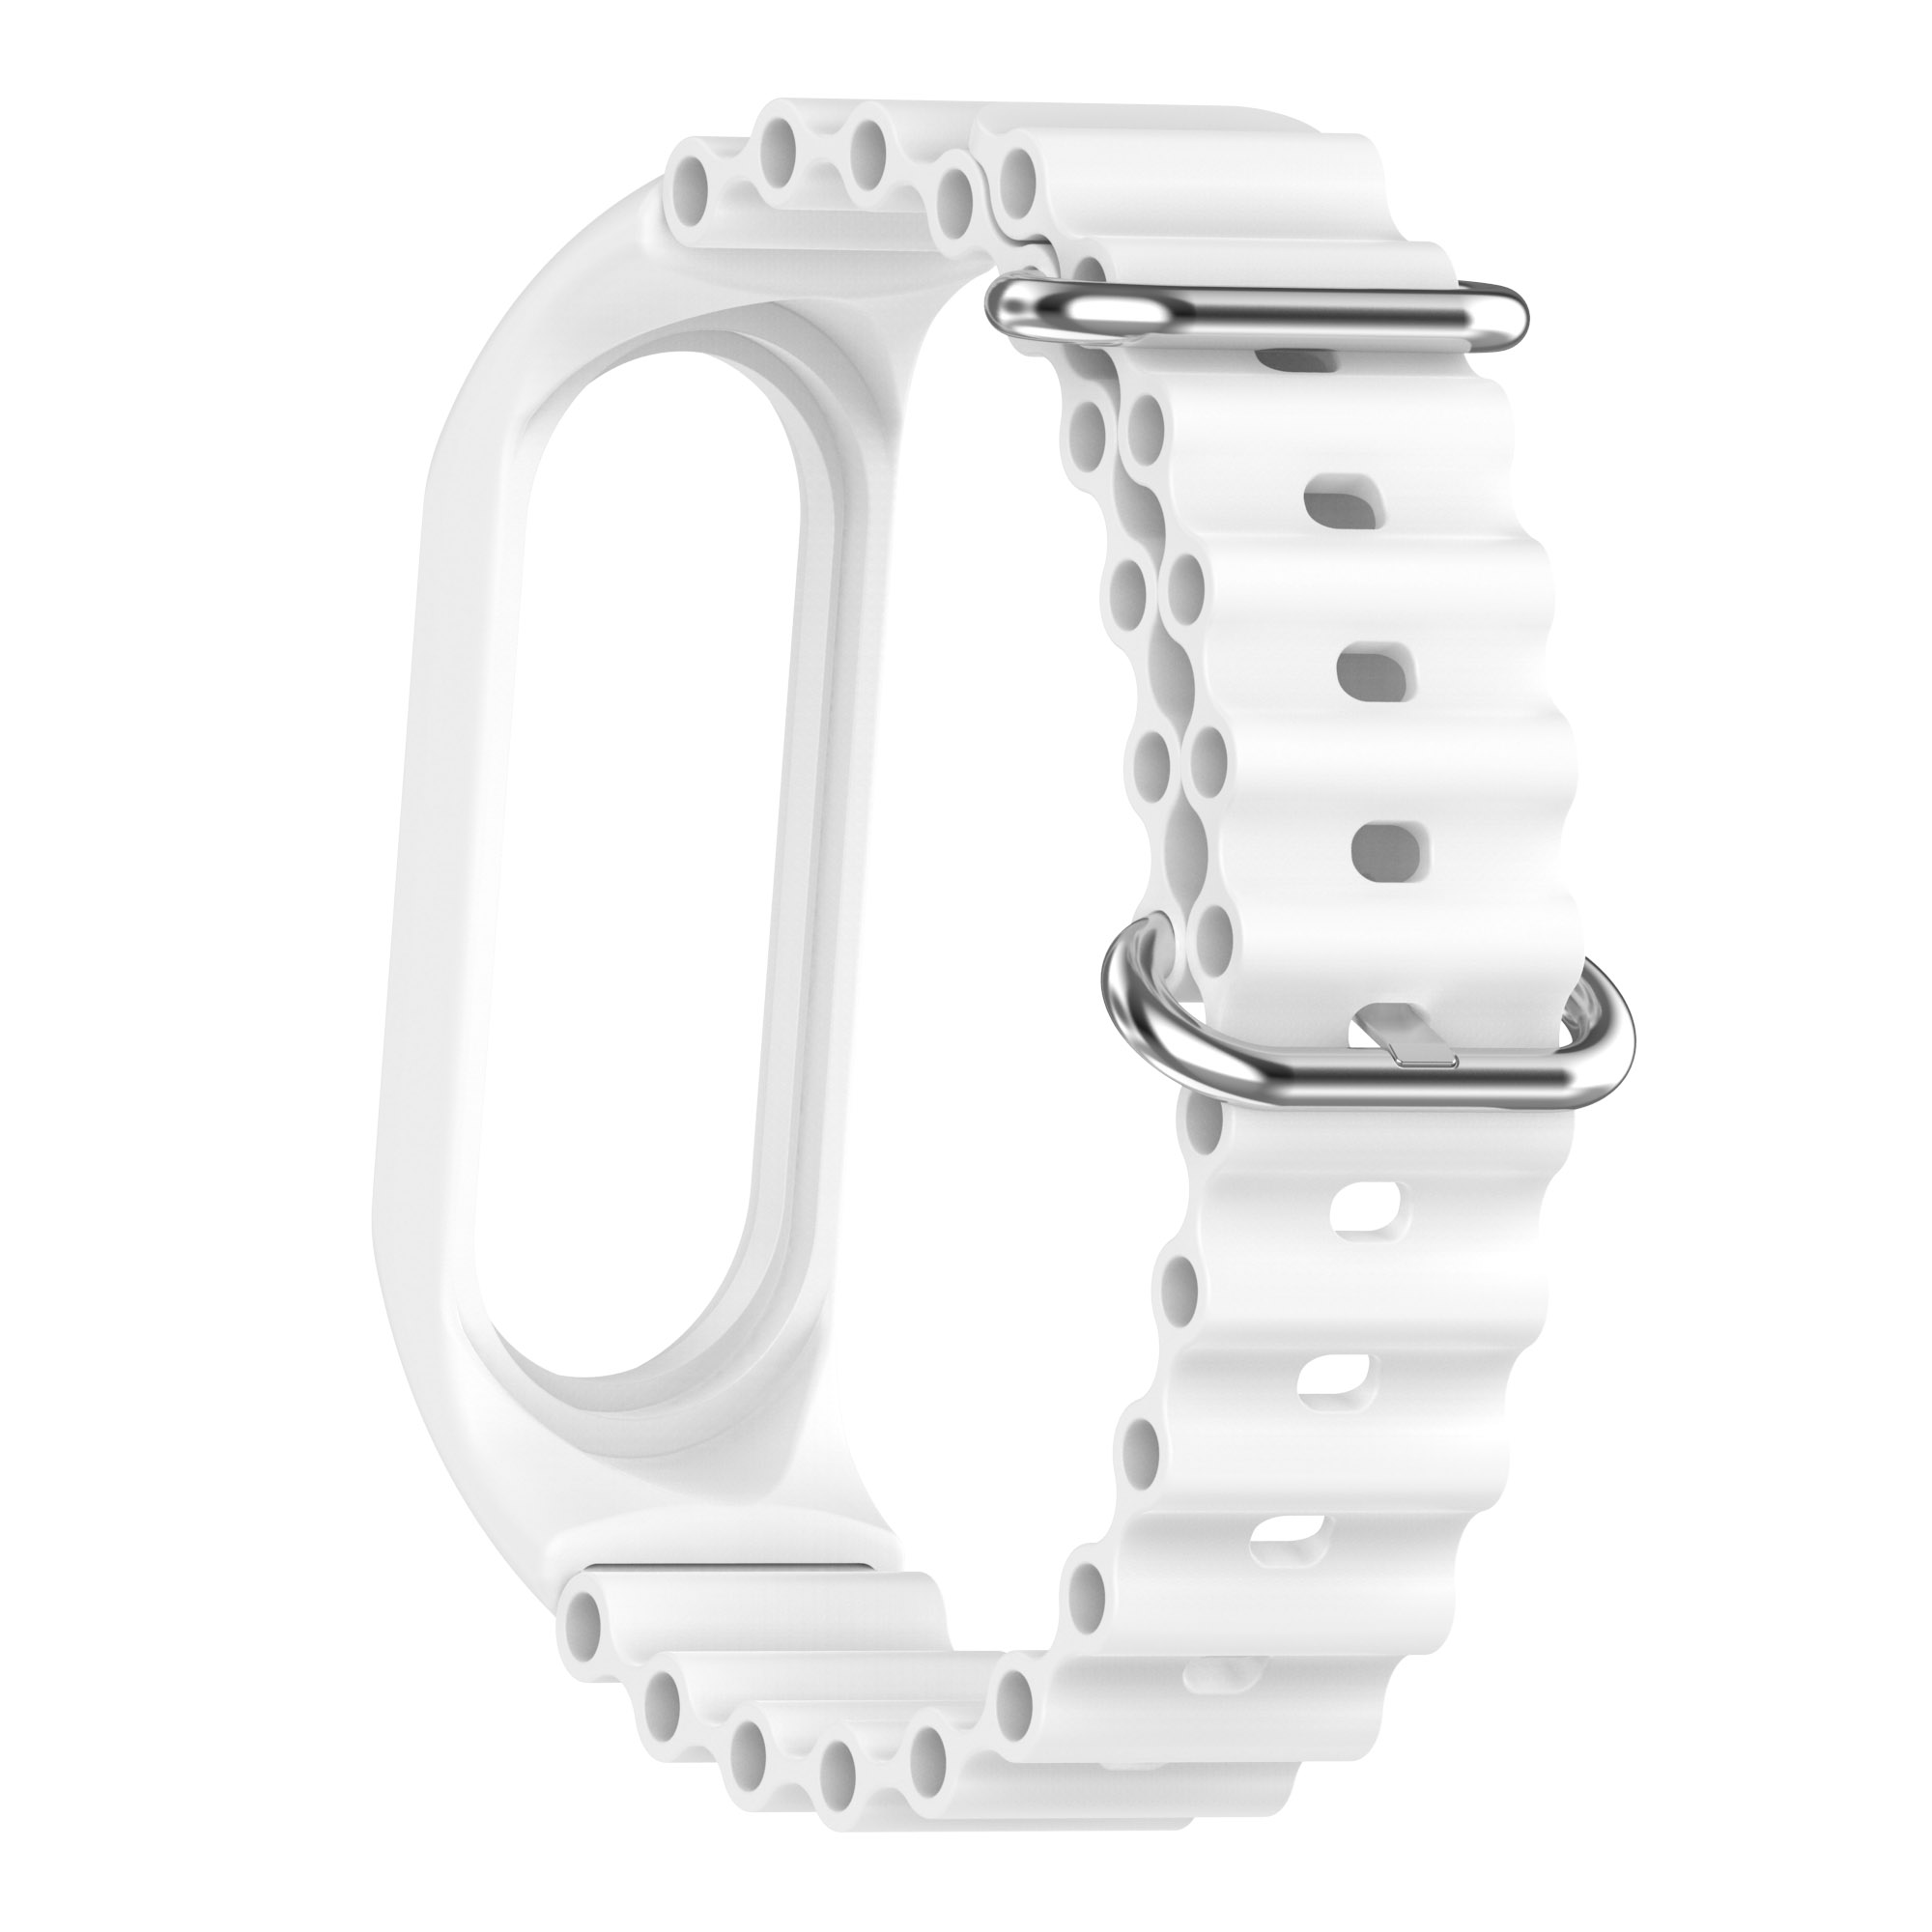 6 INF Mi 5 Xiaomi, Weiß Band Uhrarmband, Ersatzarmband, 7, / /